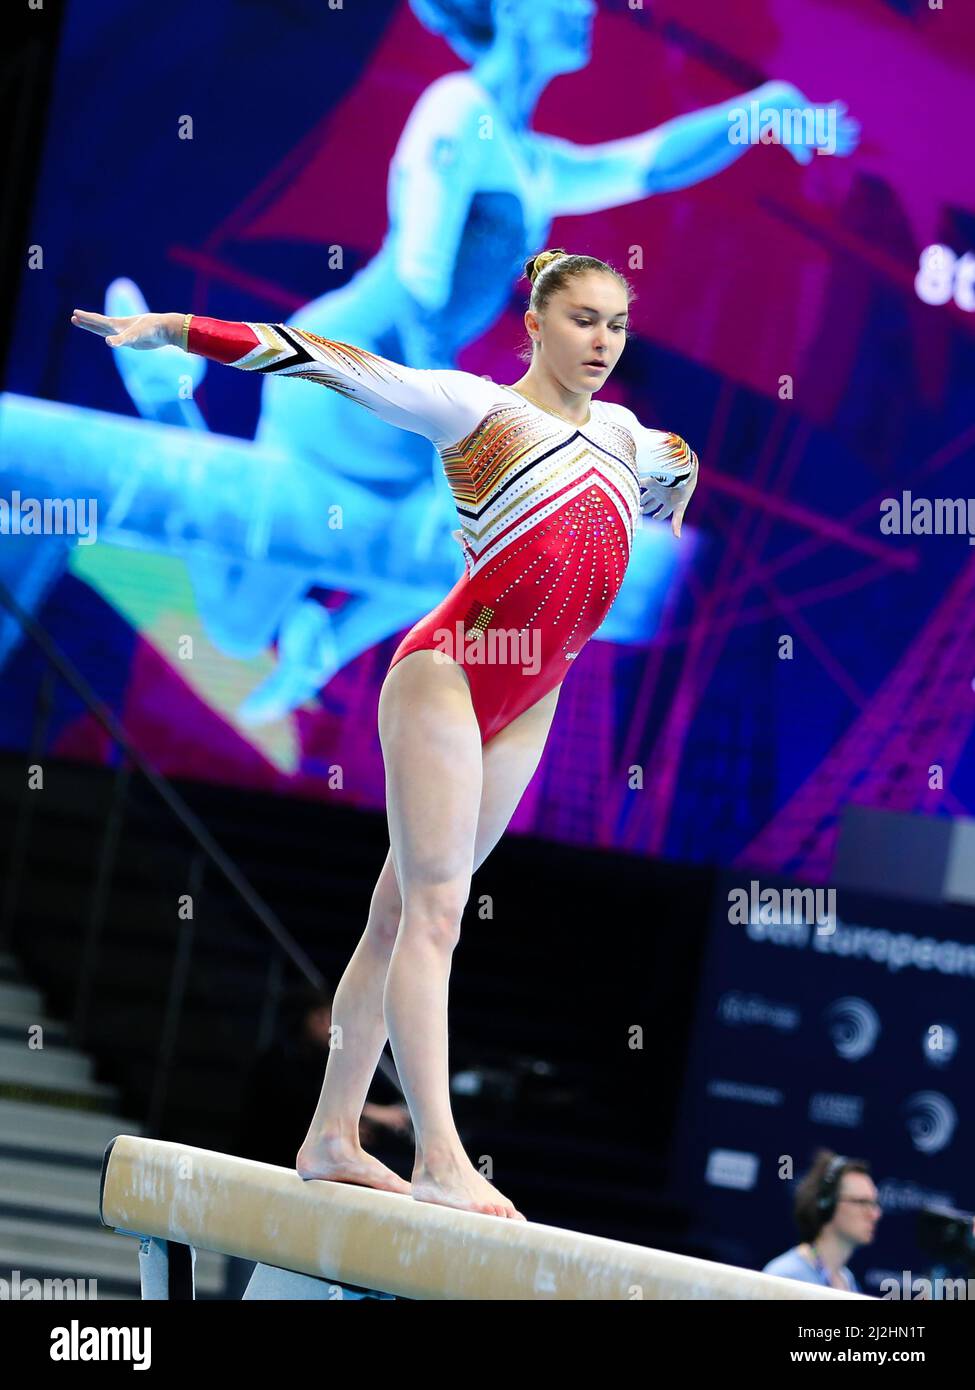 Szczecin, Poland, April 11, 2019: Belgian female athlete Maellyse Brassart competes on the balance beam Stock Photo